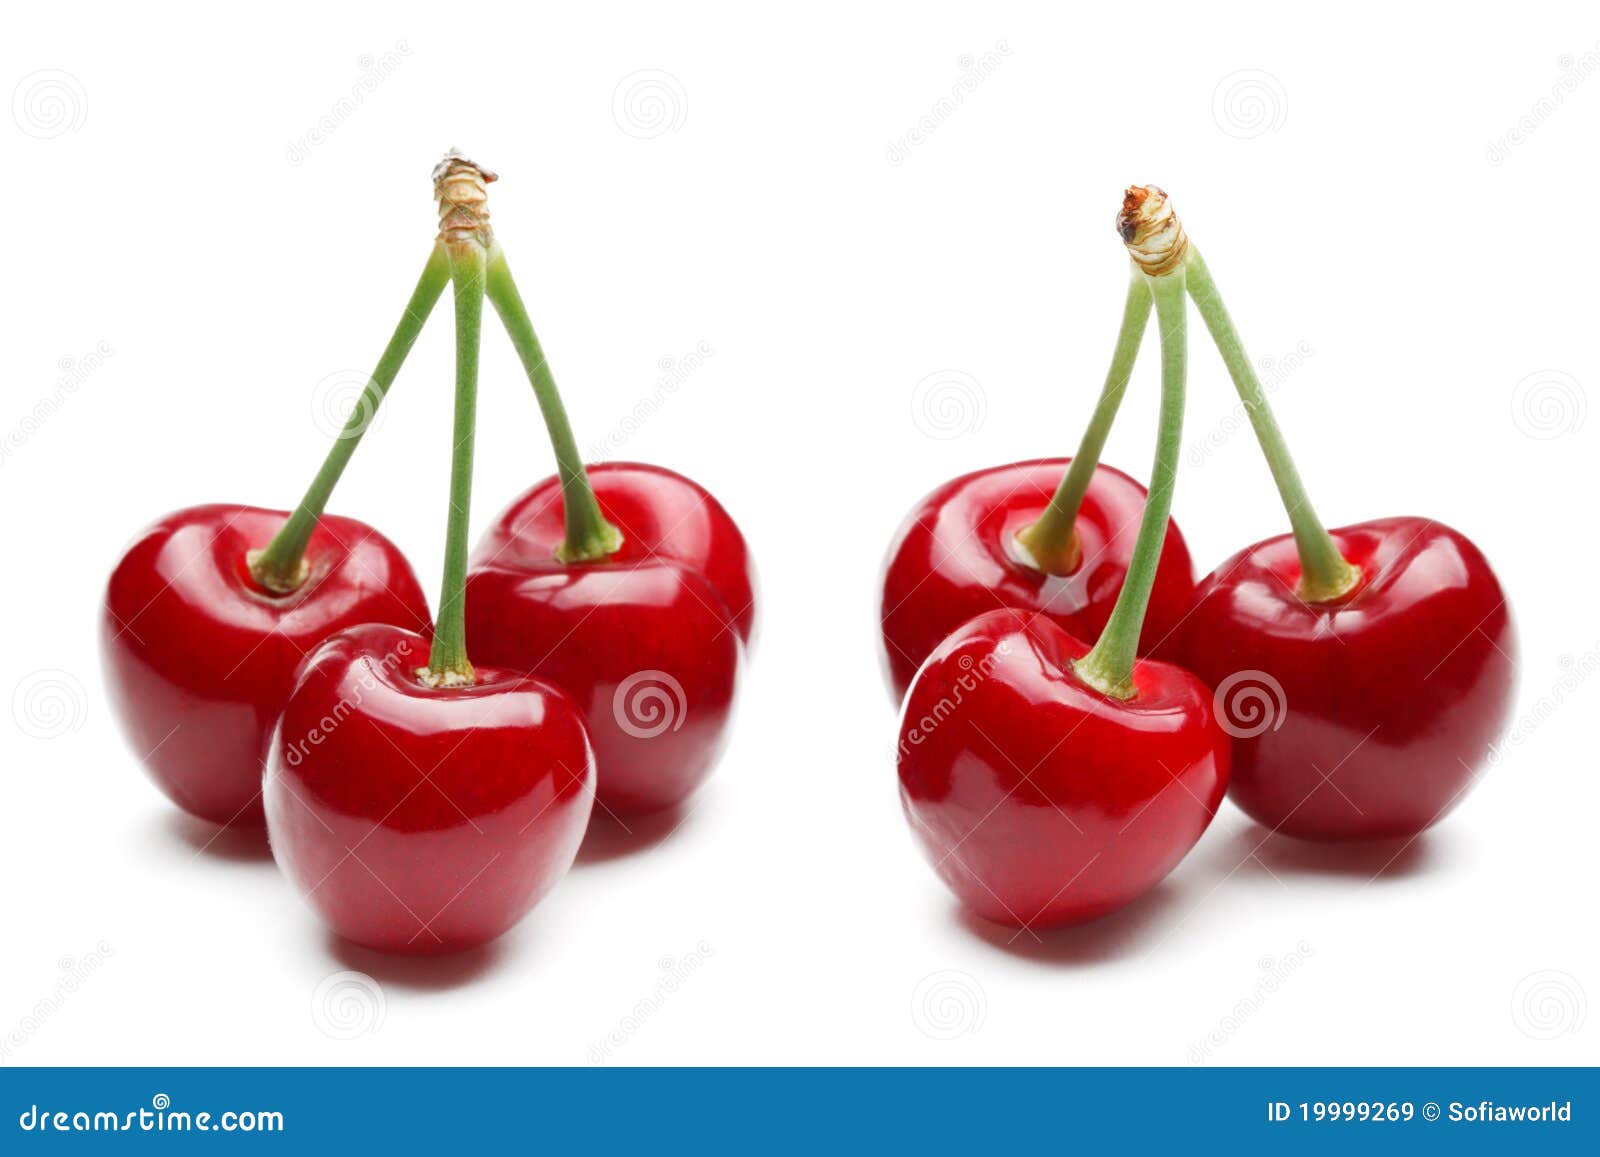 Sweet cherry stock image. Image of freshness, mellow - 19999269